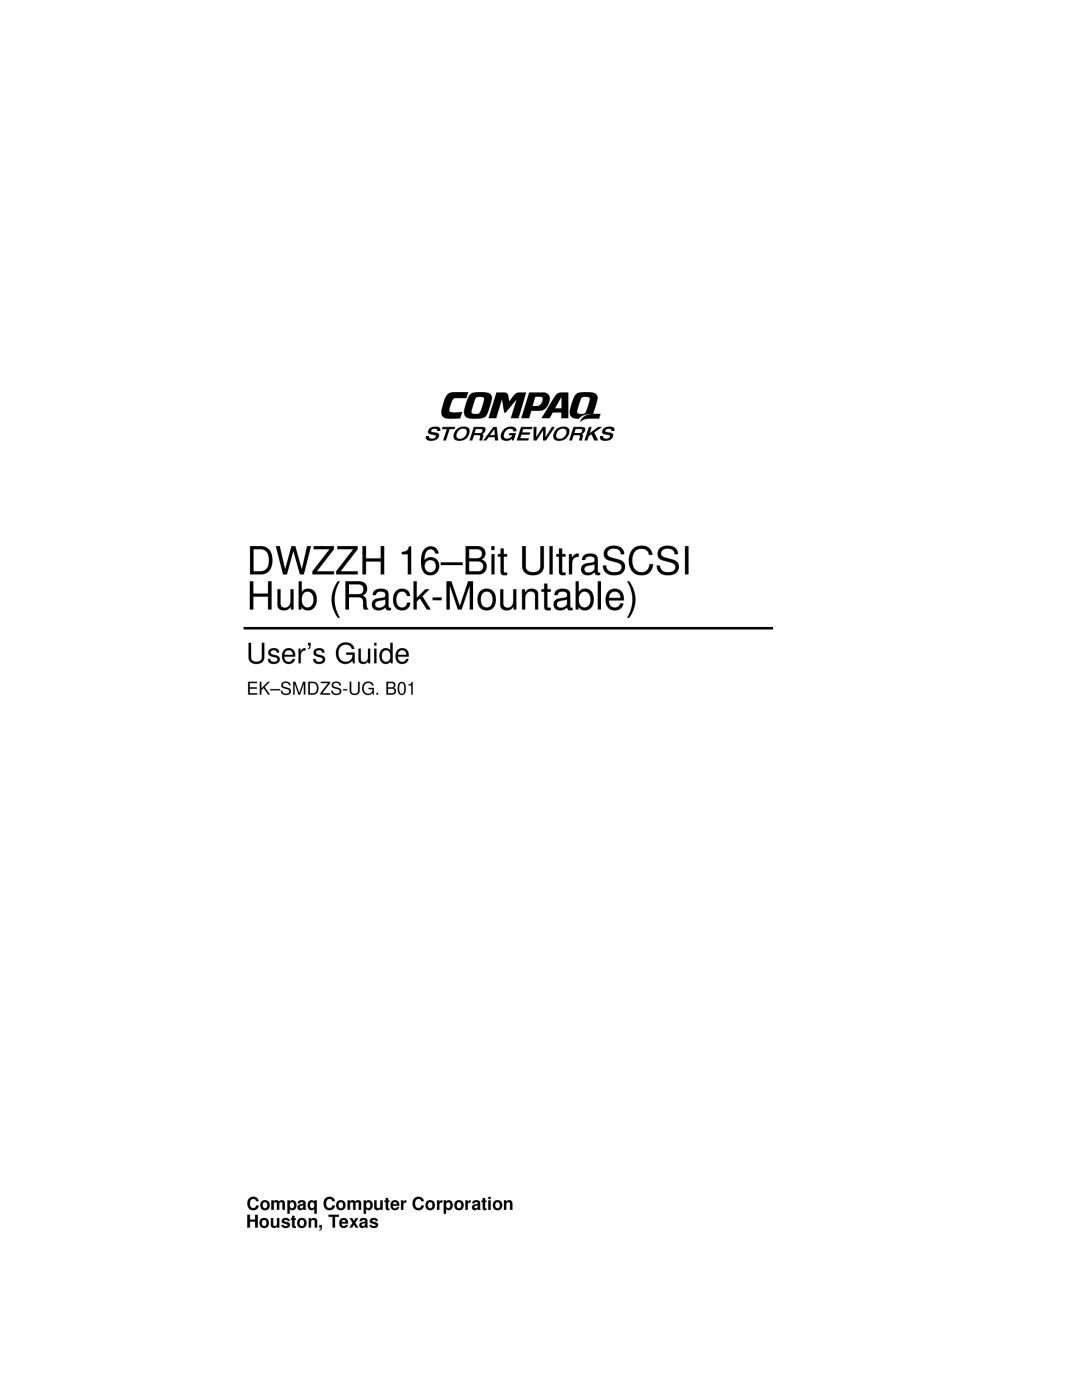 Compaq S5 manual Dwzzh 16-Bit UltraSCSI Hub Rack-Mountable 